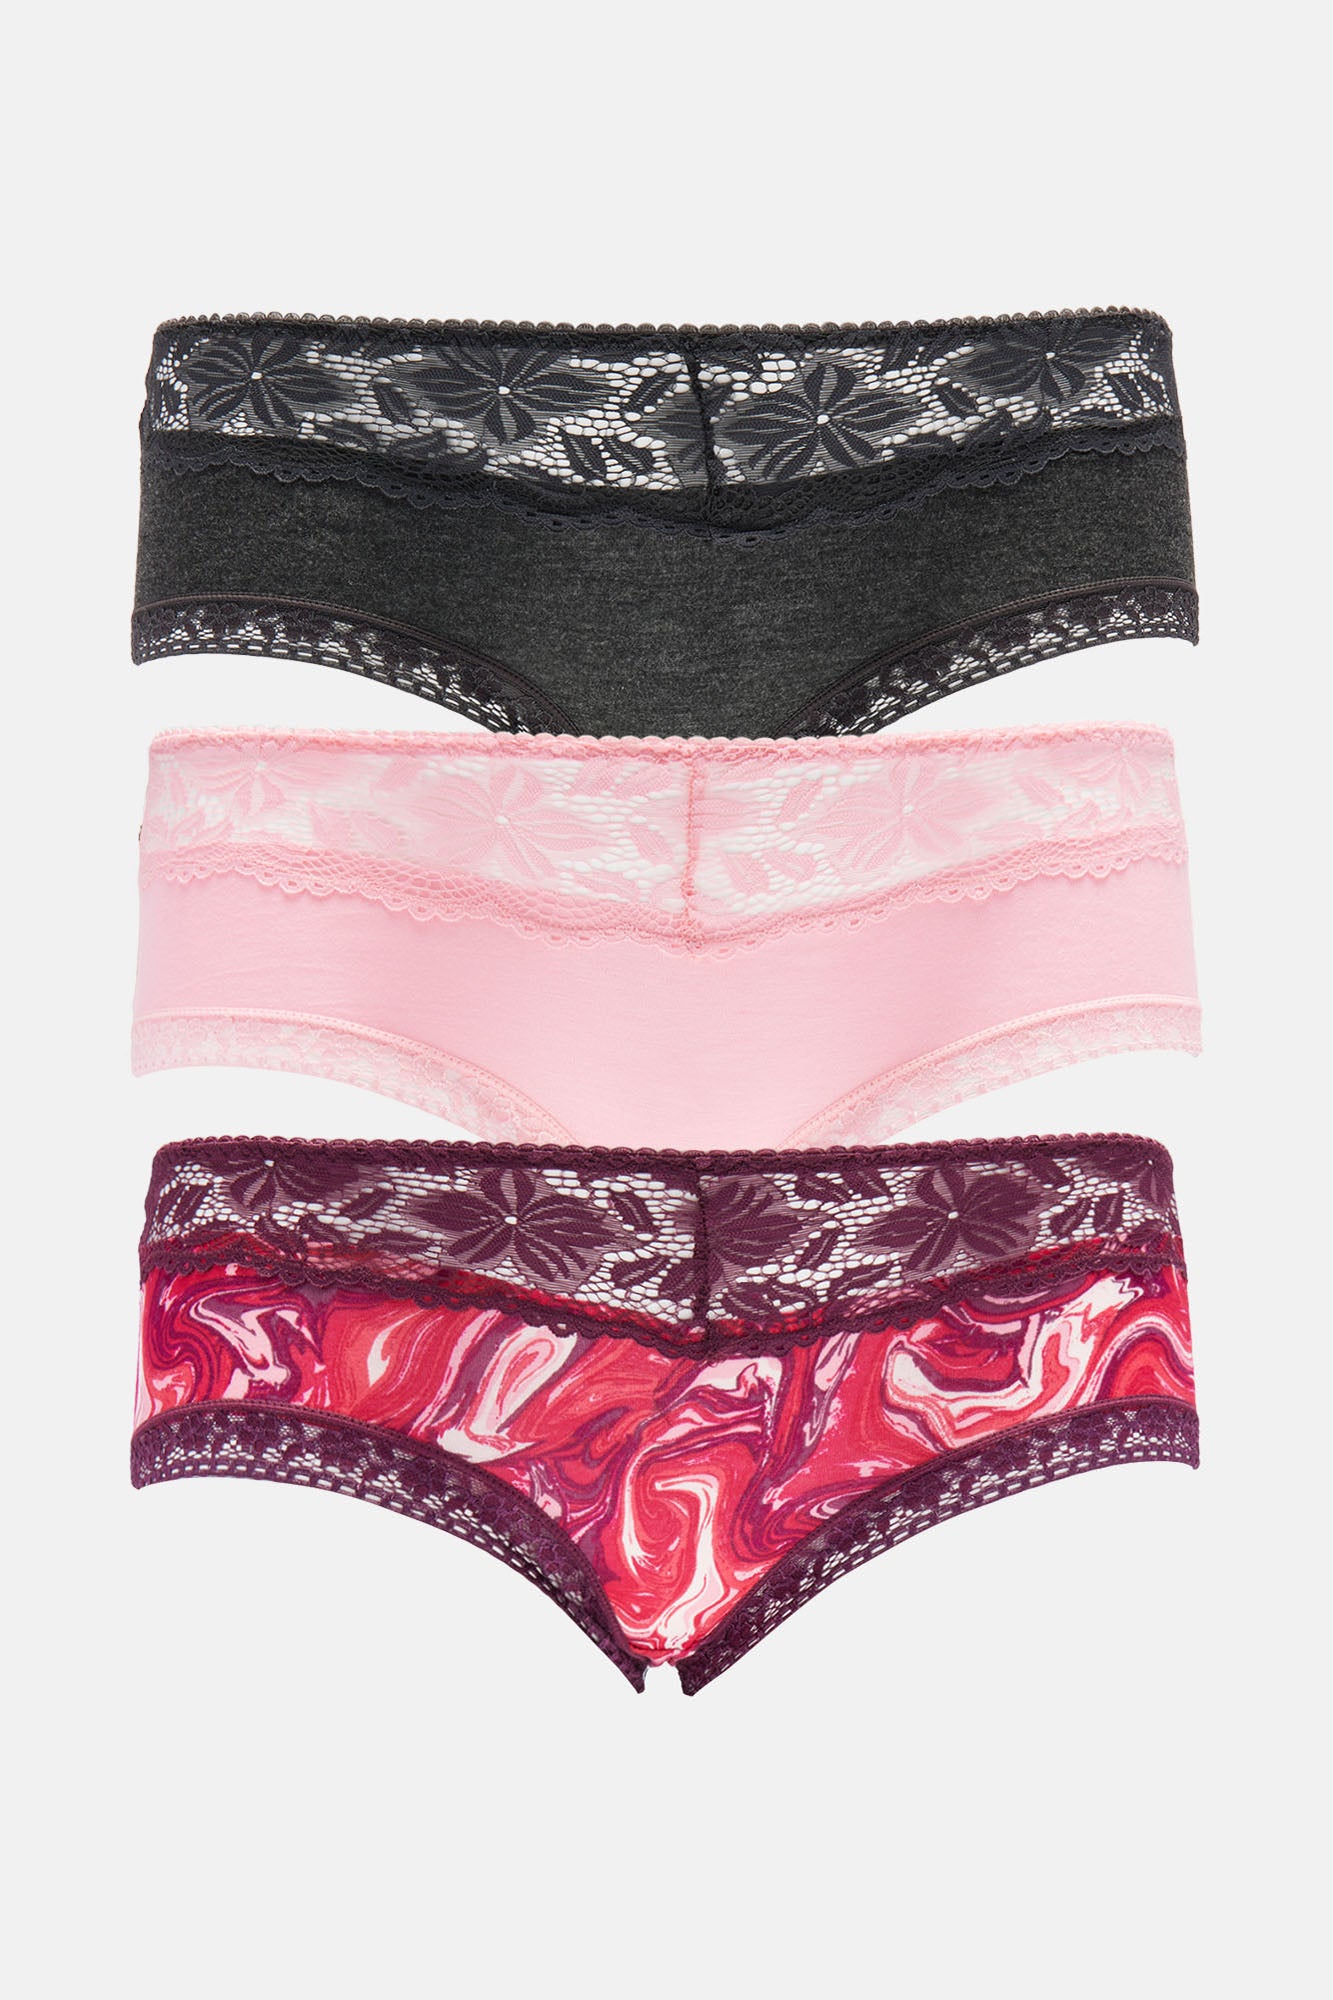 Feeling Comfy And Cute 3 Pack Panties - Pink/combo, Fashion Nova, Lingerie  & Sleepwear